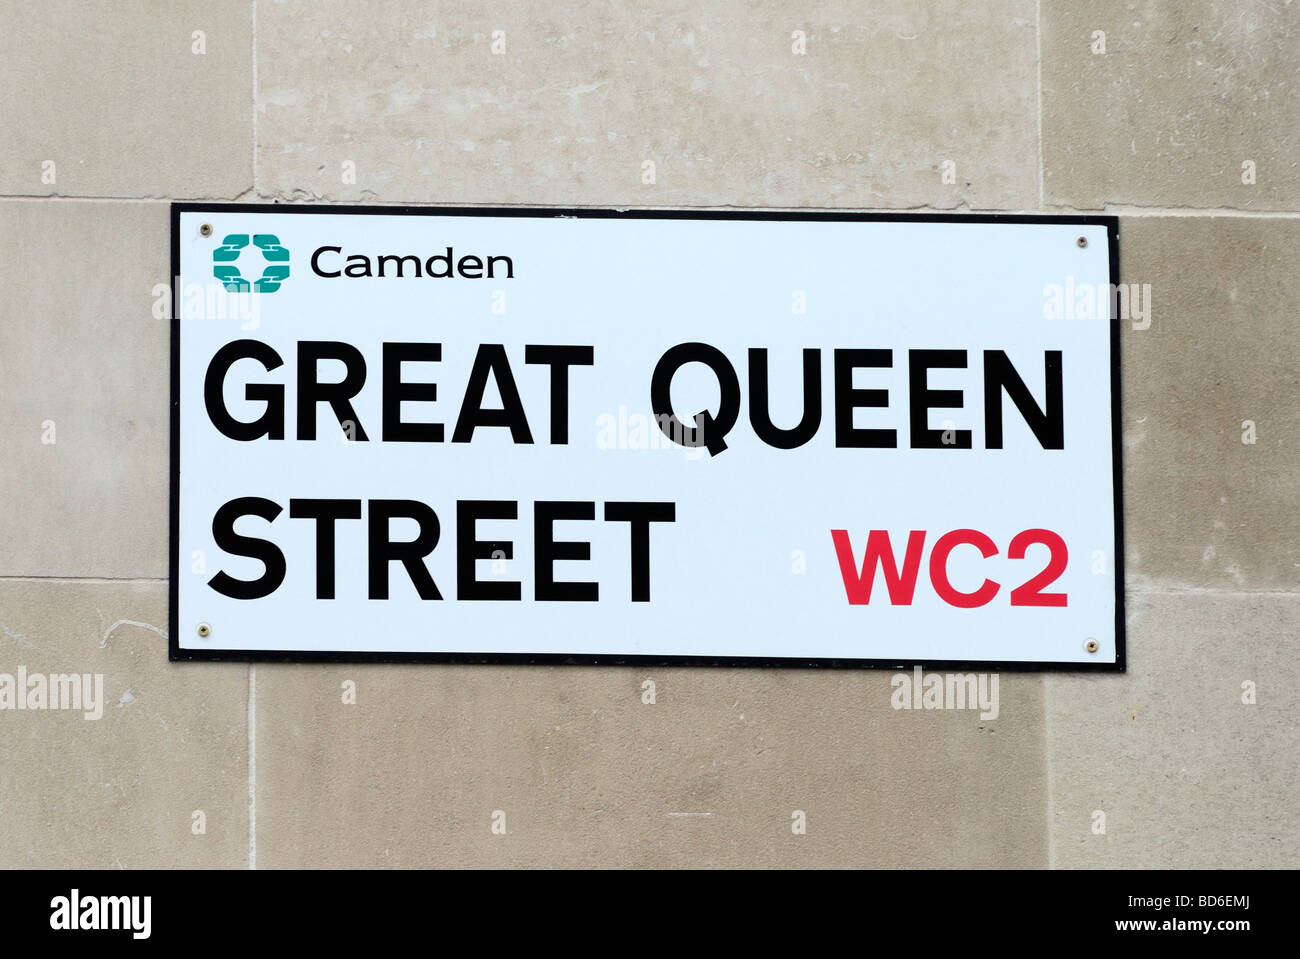 Great Queen Street Sign Londres, Angleterre Grande-Bretagne juillet 09 Banque D'Images